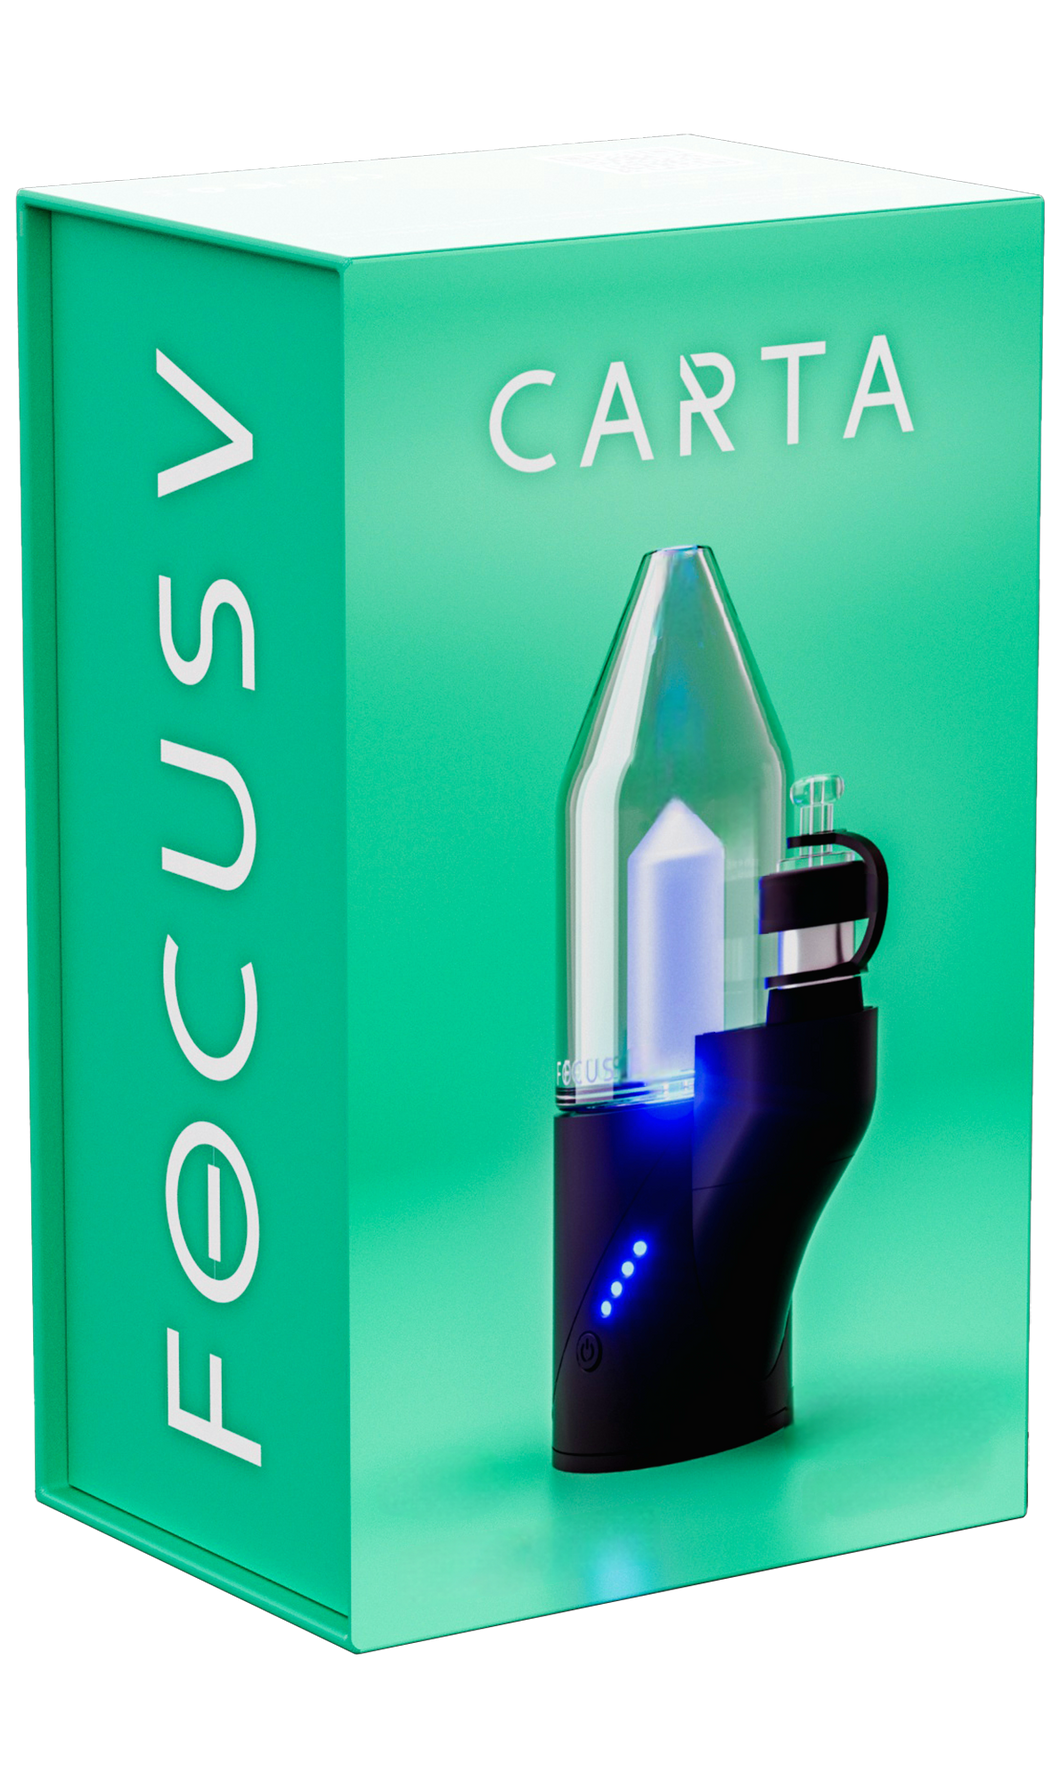 Focus V Carta Classic